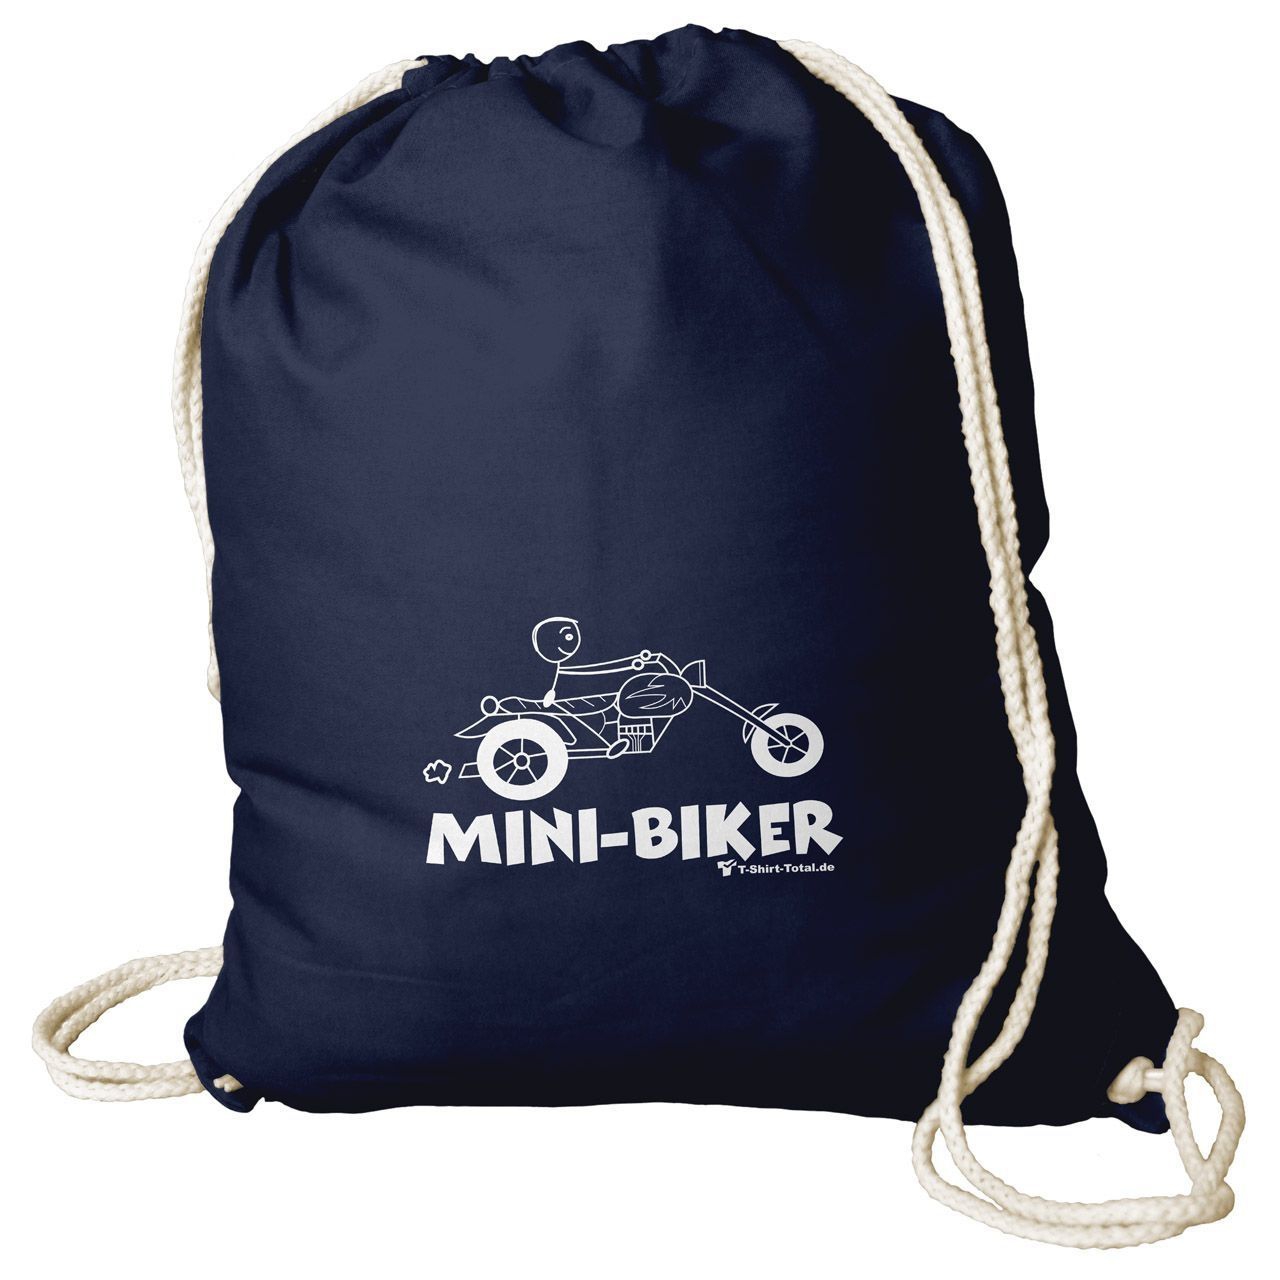 Mini Biker Rucksack Beutel navy